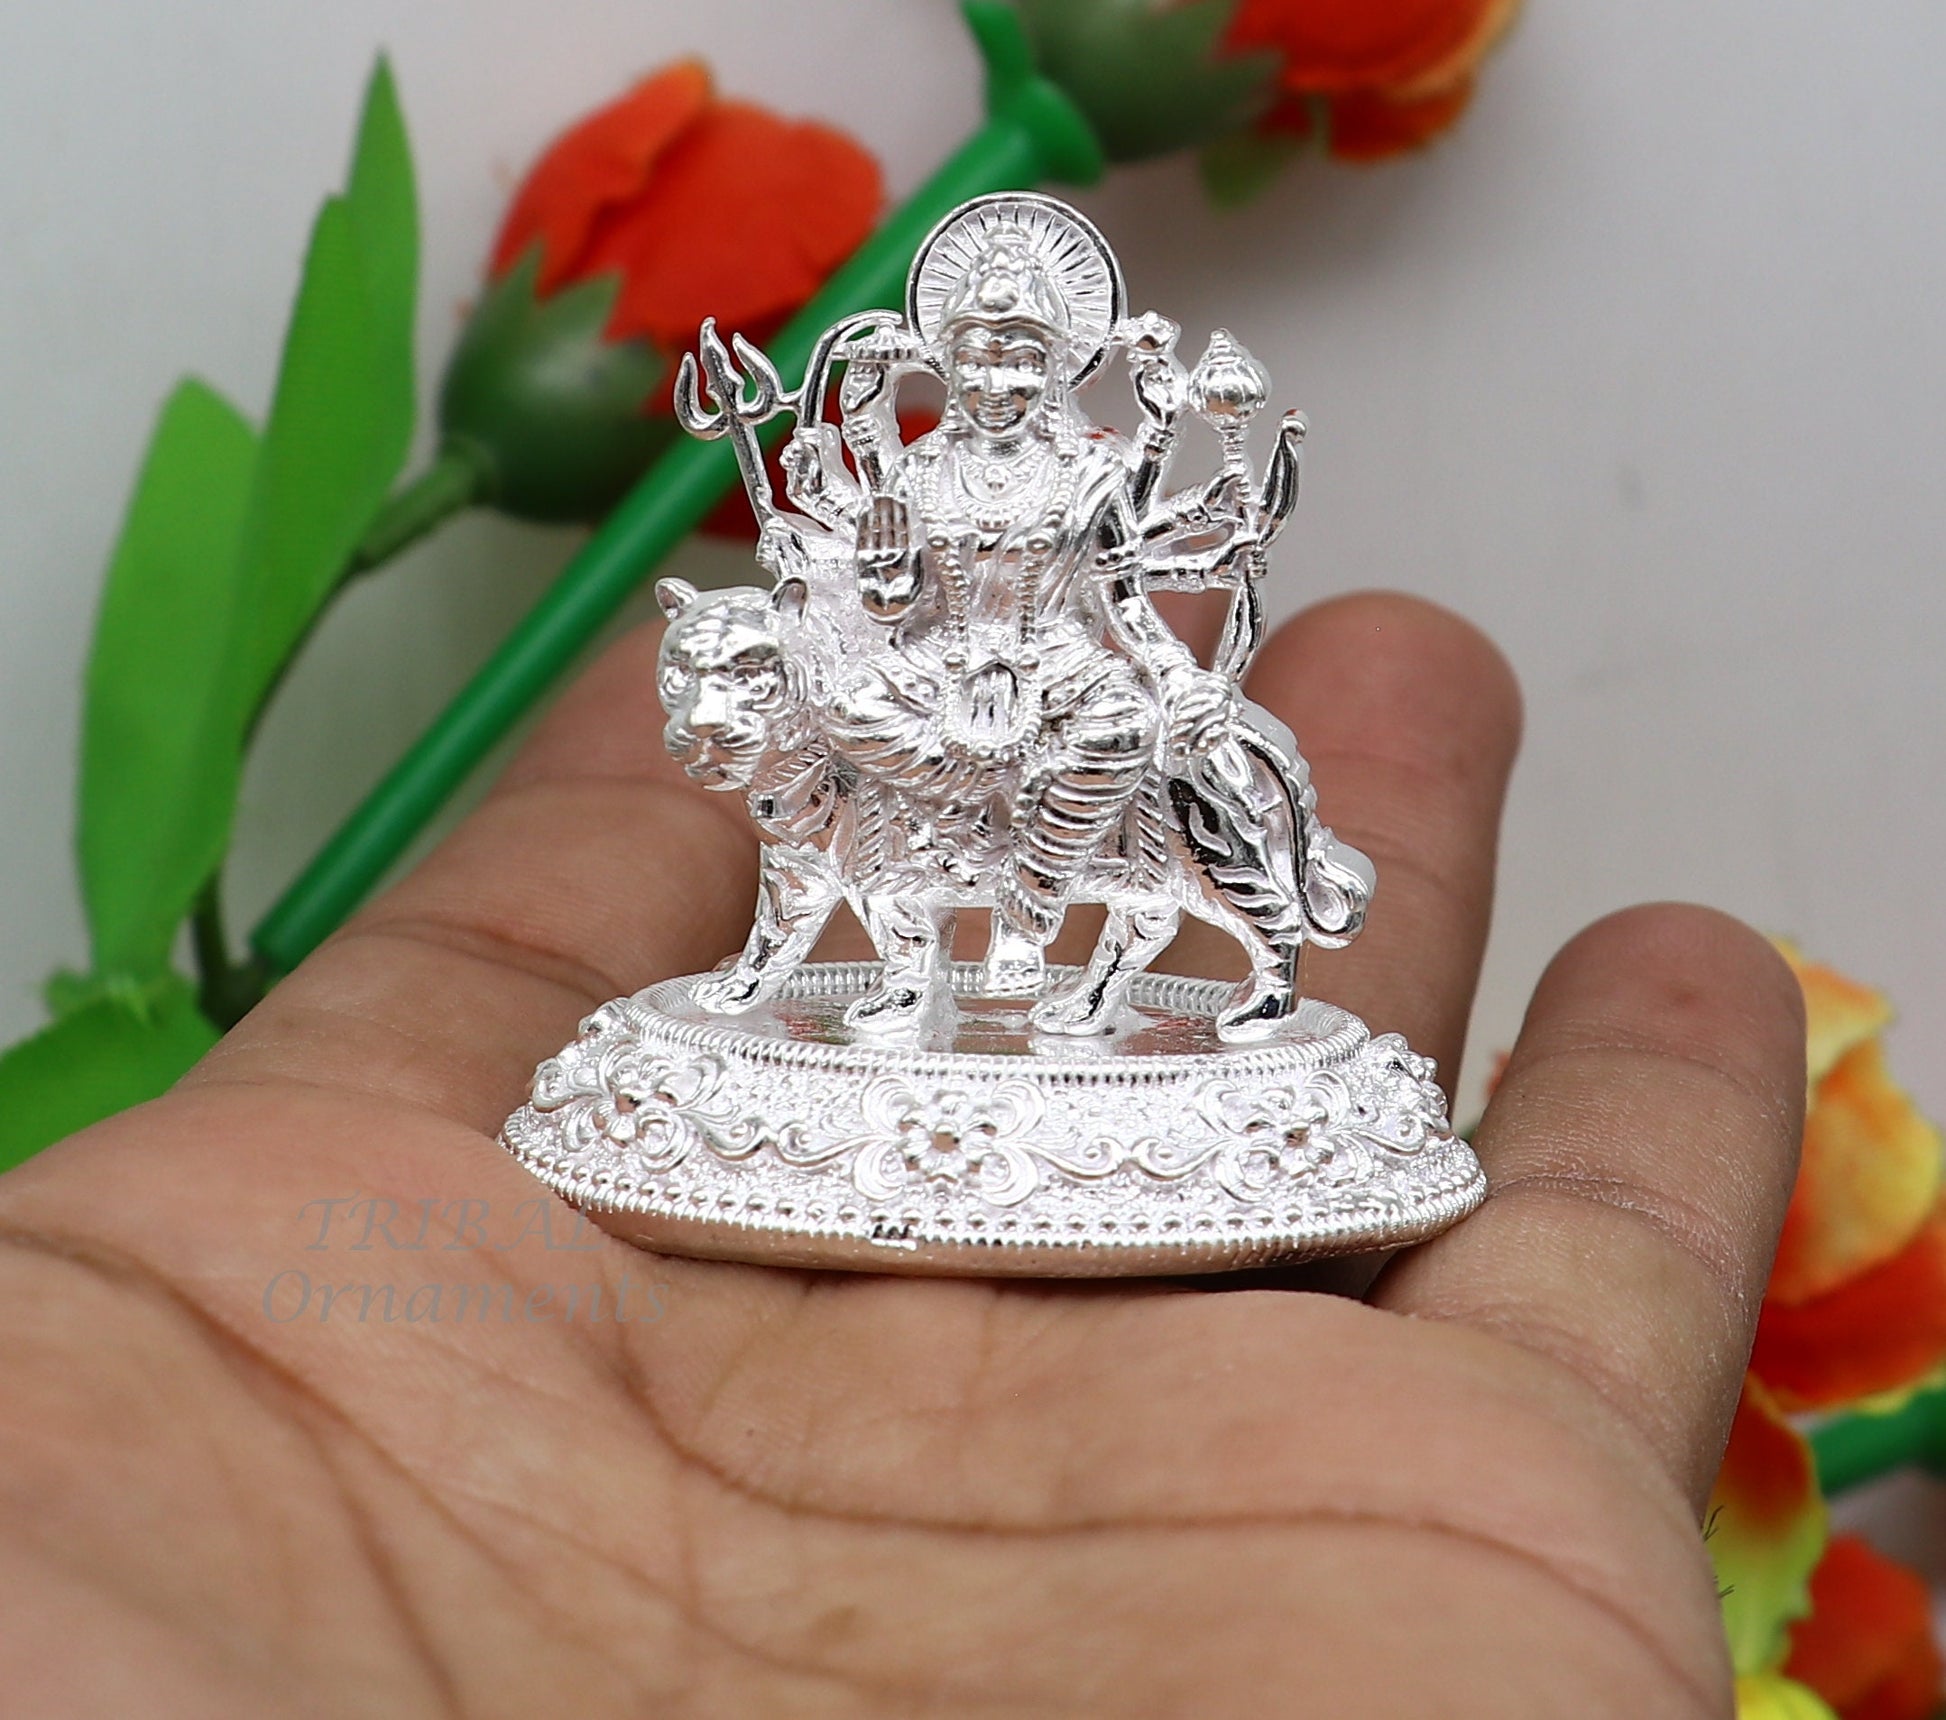 925 Sterling silver Goddess durga/bhawani vaishno devi maa Pooja statue figurine home temple puja statue sculpture amazing gifting Art595 - TRIBAL ORNAMENTS